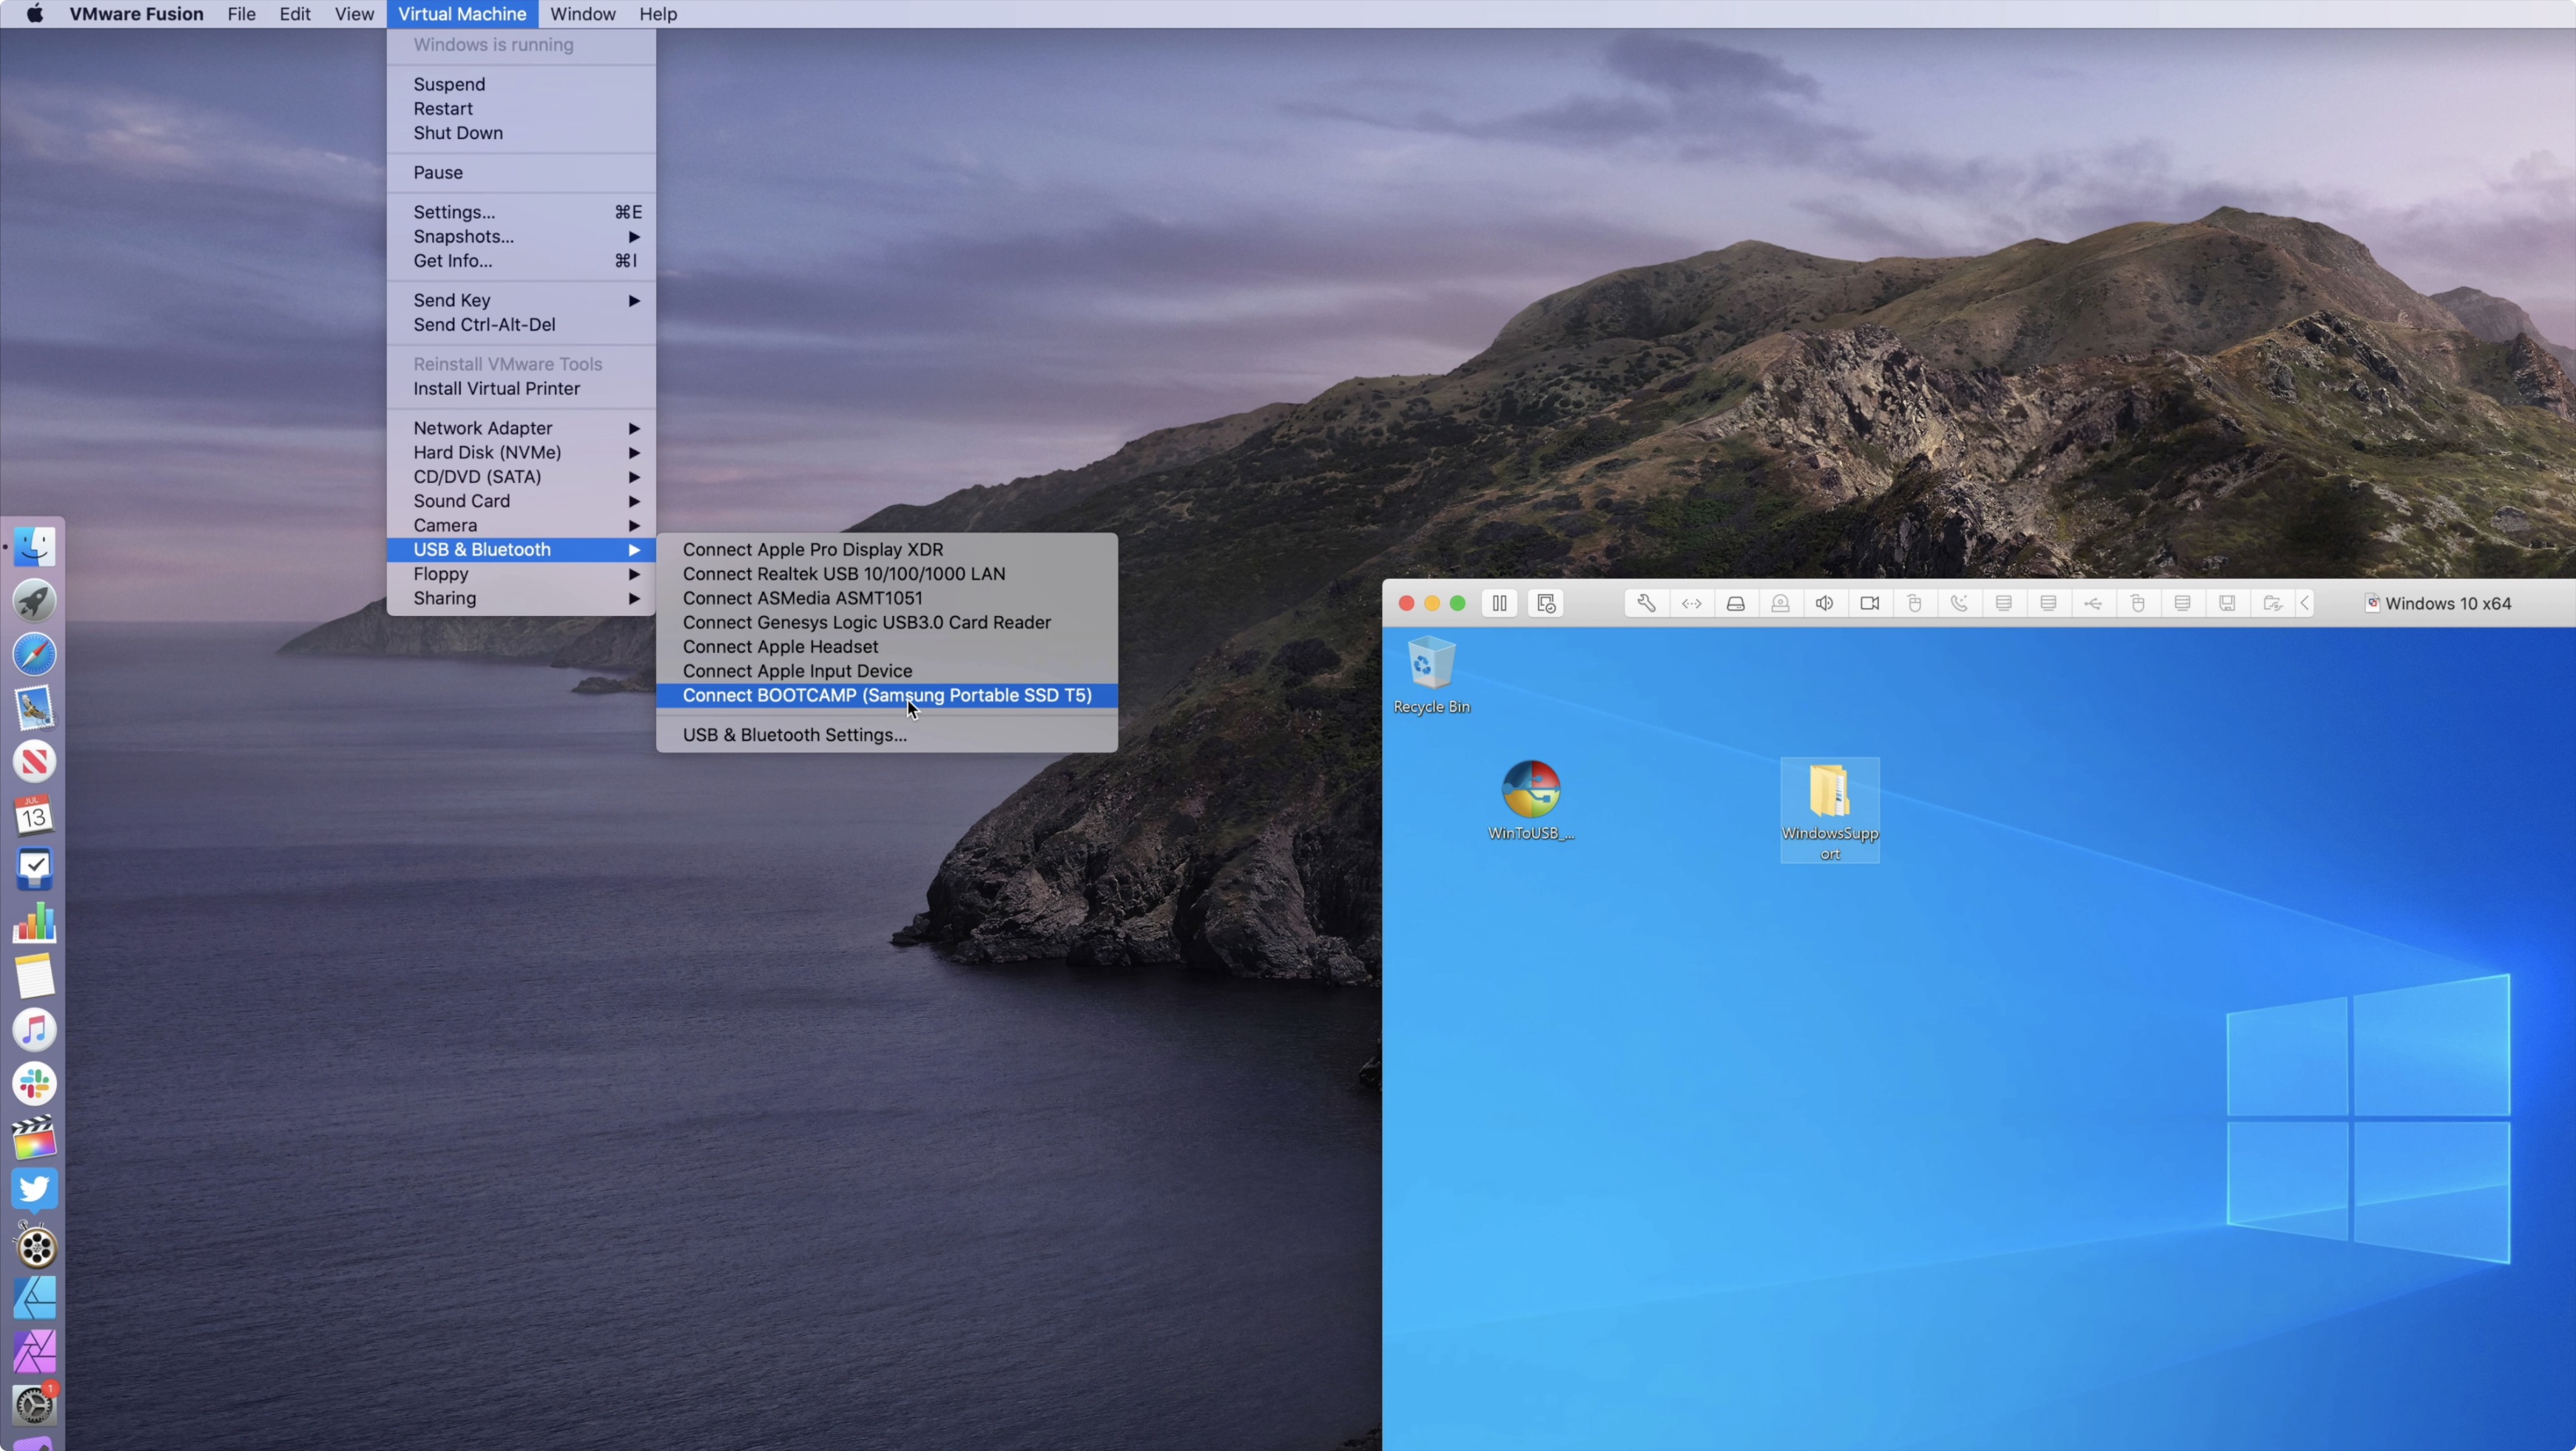 Install Windows 119 on Mac using an external SSD [Video] - 19to19Mac